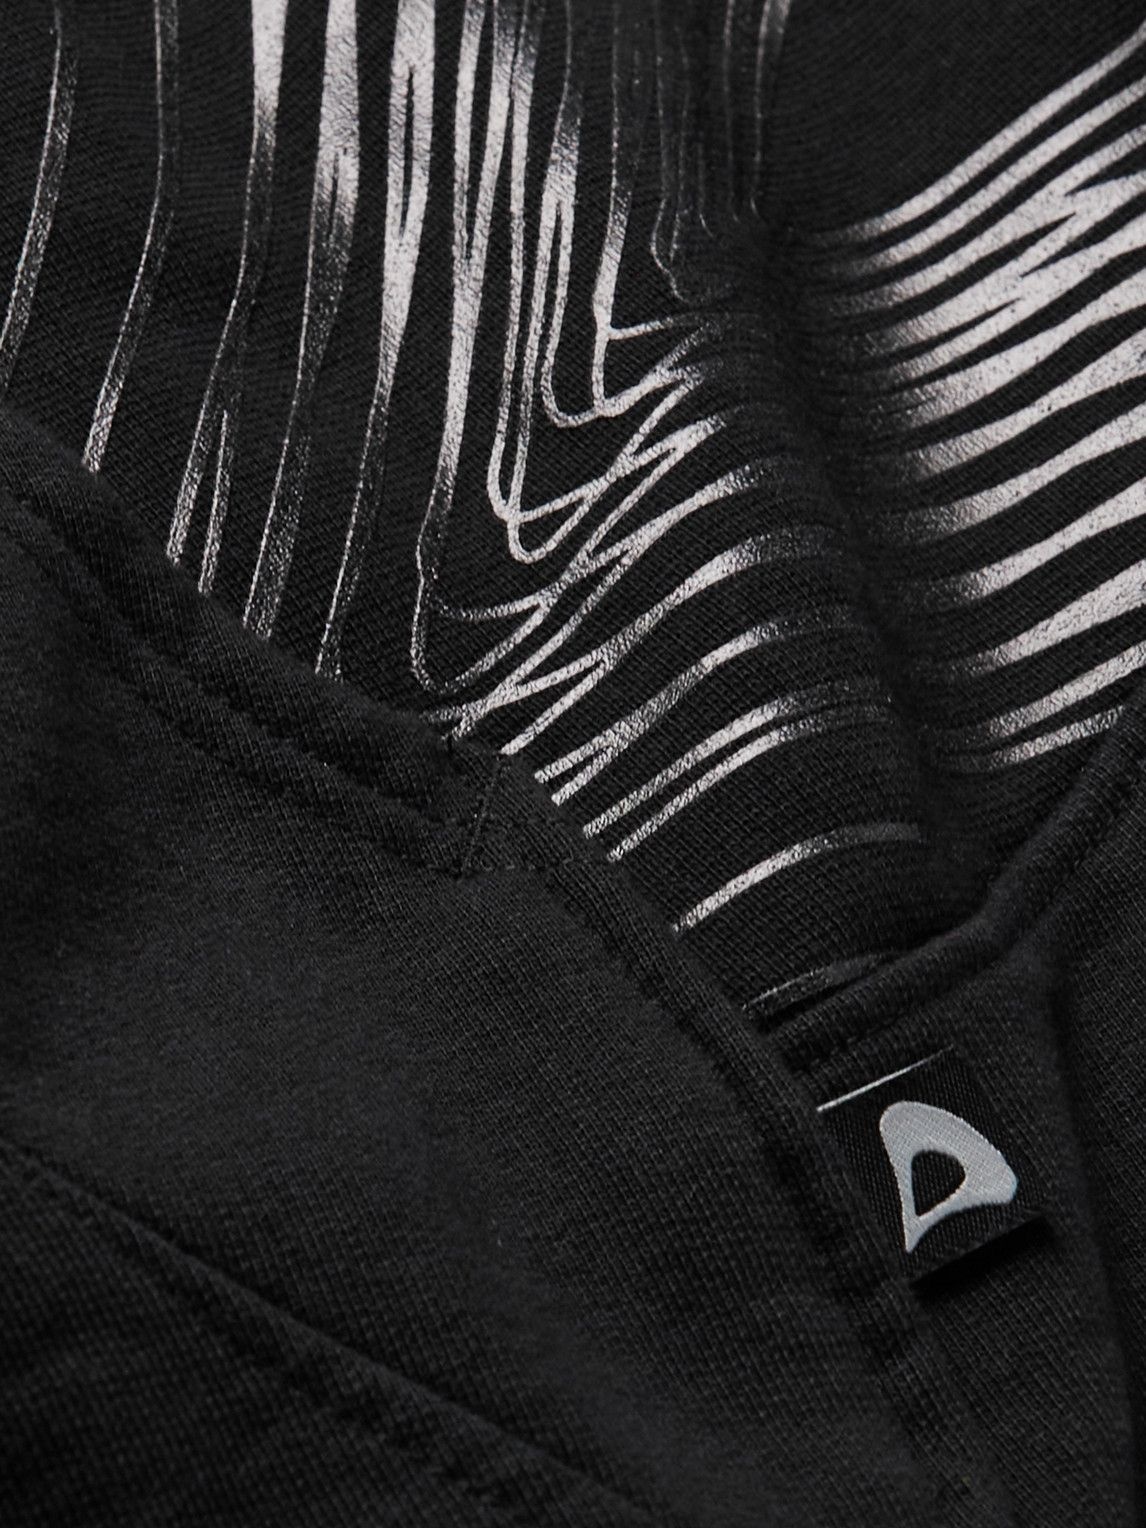 AFFIX - Audial Printed Cotton-Jersey Half-Zip Sweatshirt - Black Affix